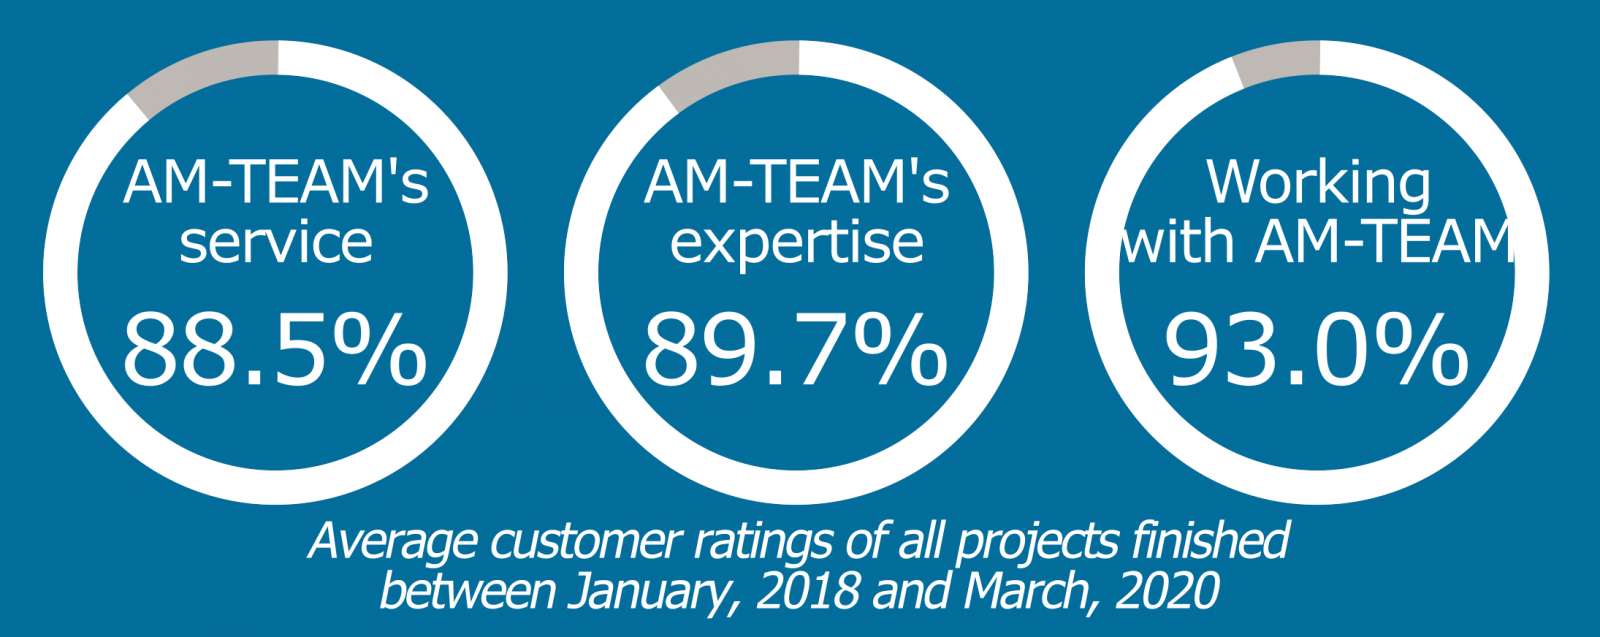 The AM-TEAM customer satisfaction scores